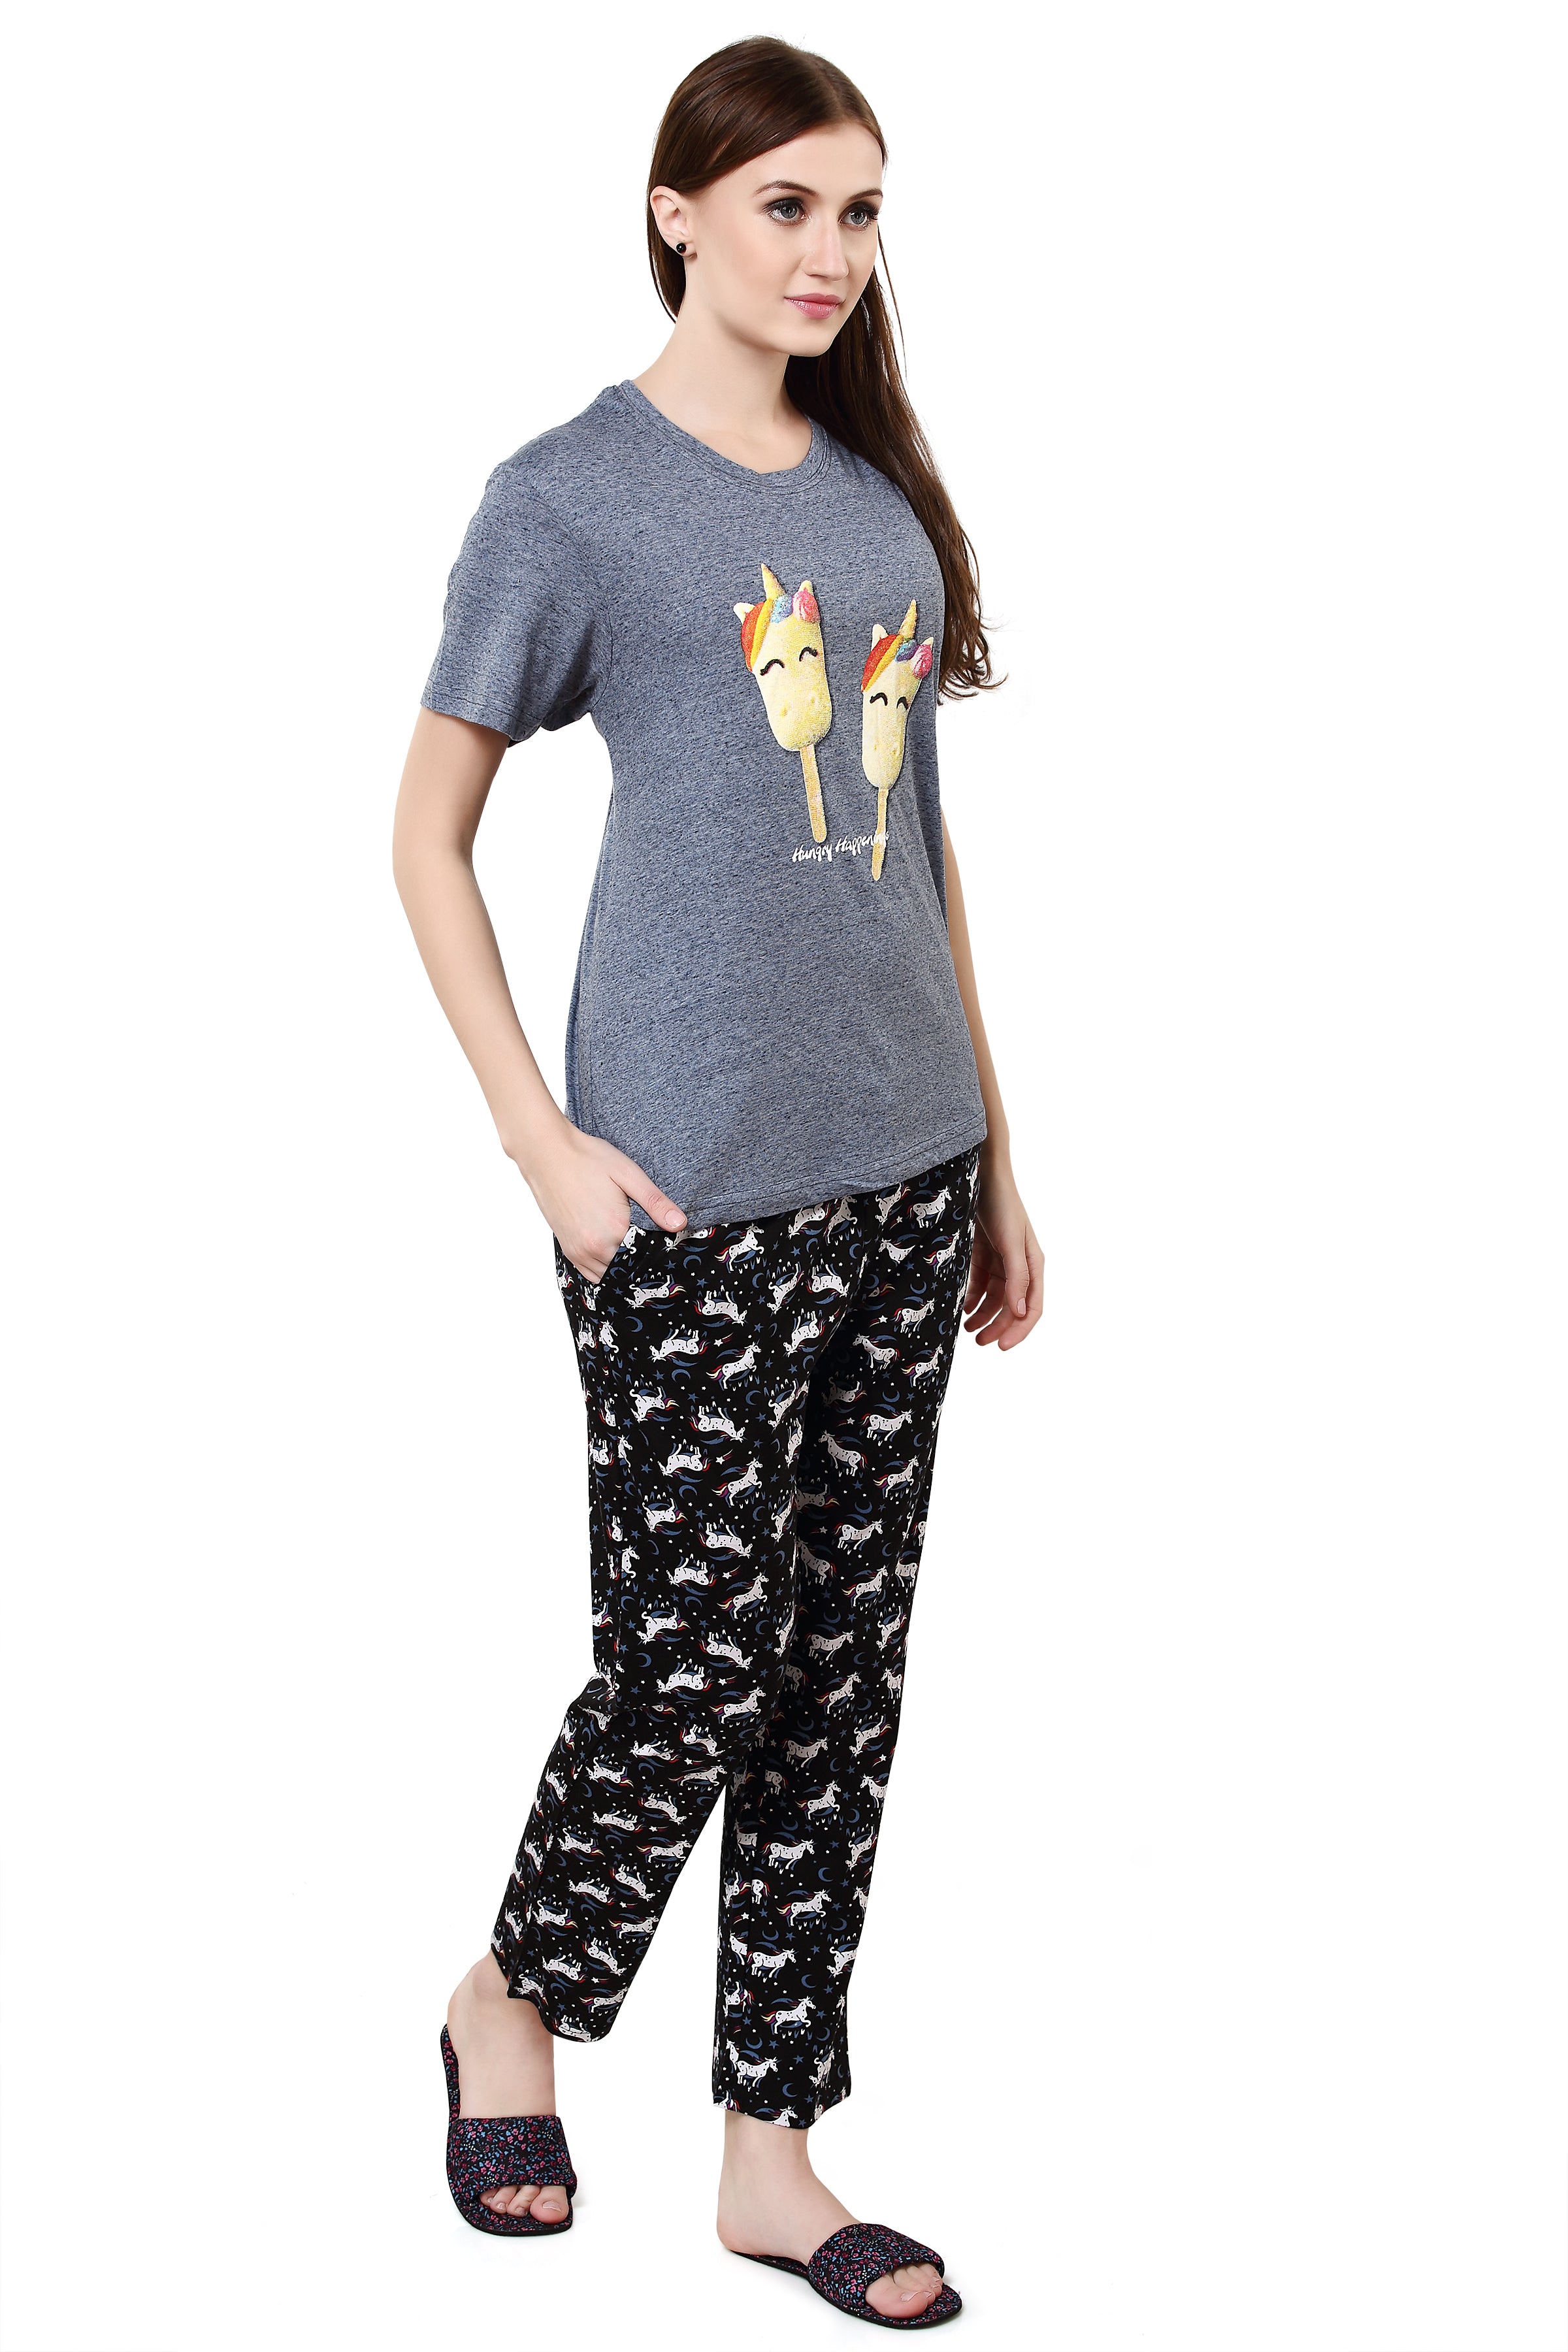 Women's Anthra Melange Round Neck Ice-cream & unicorn Printed Pajama Set (Goat Grey & Black, S)